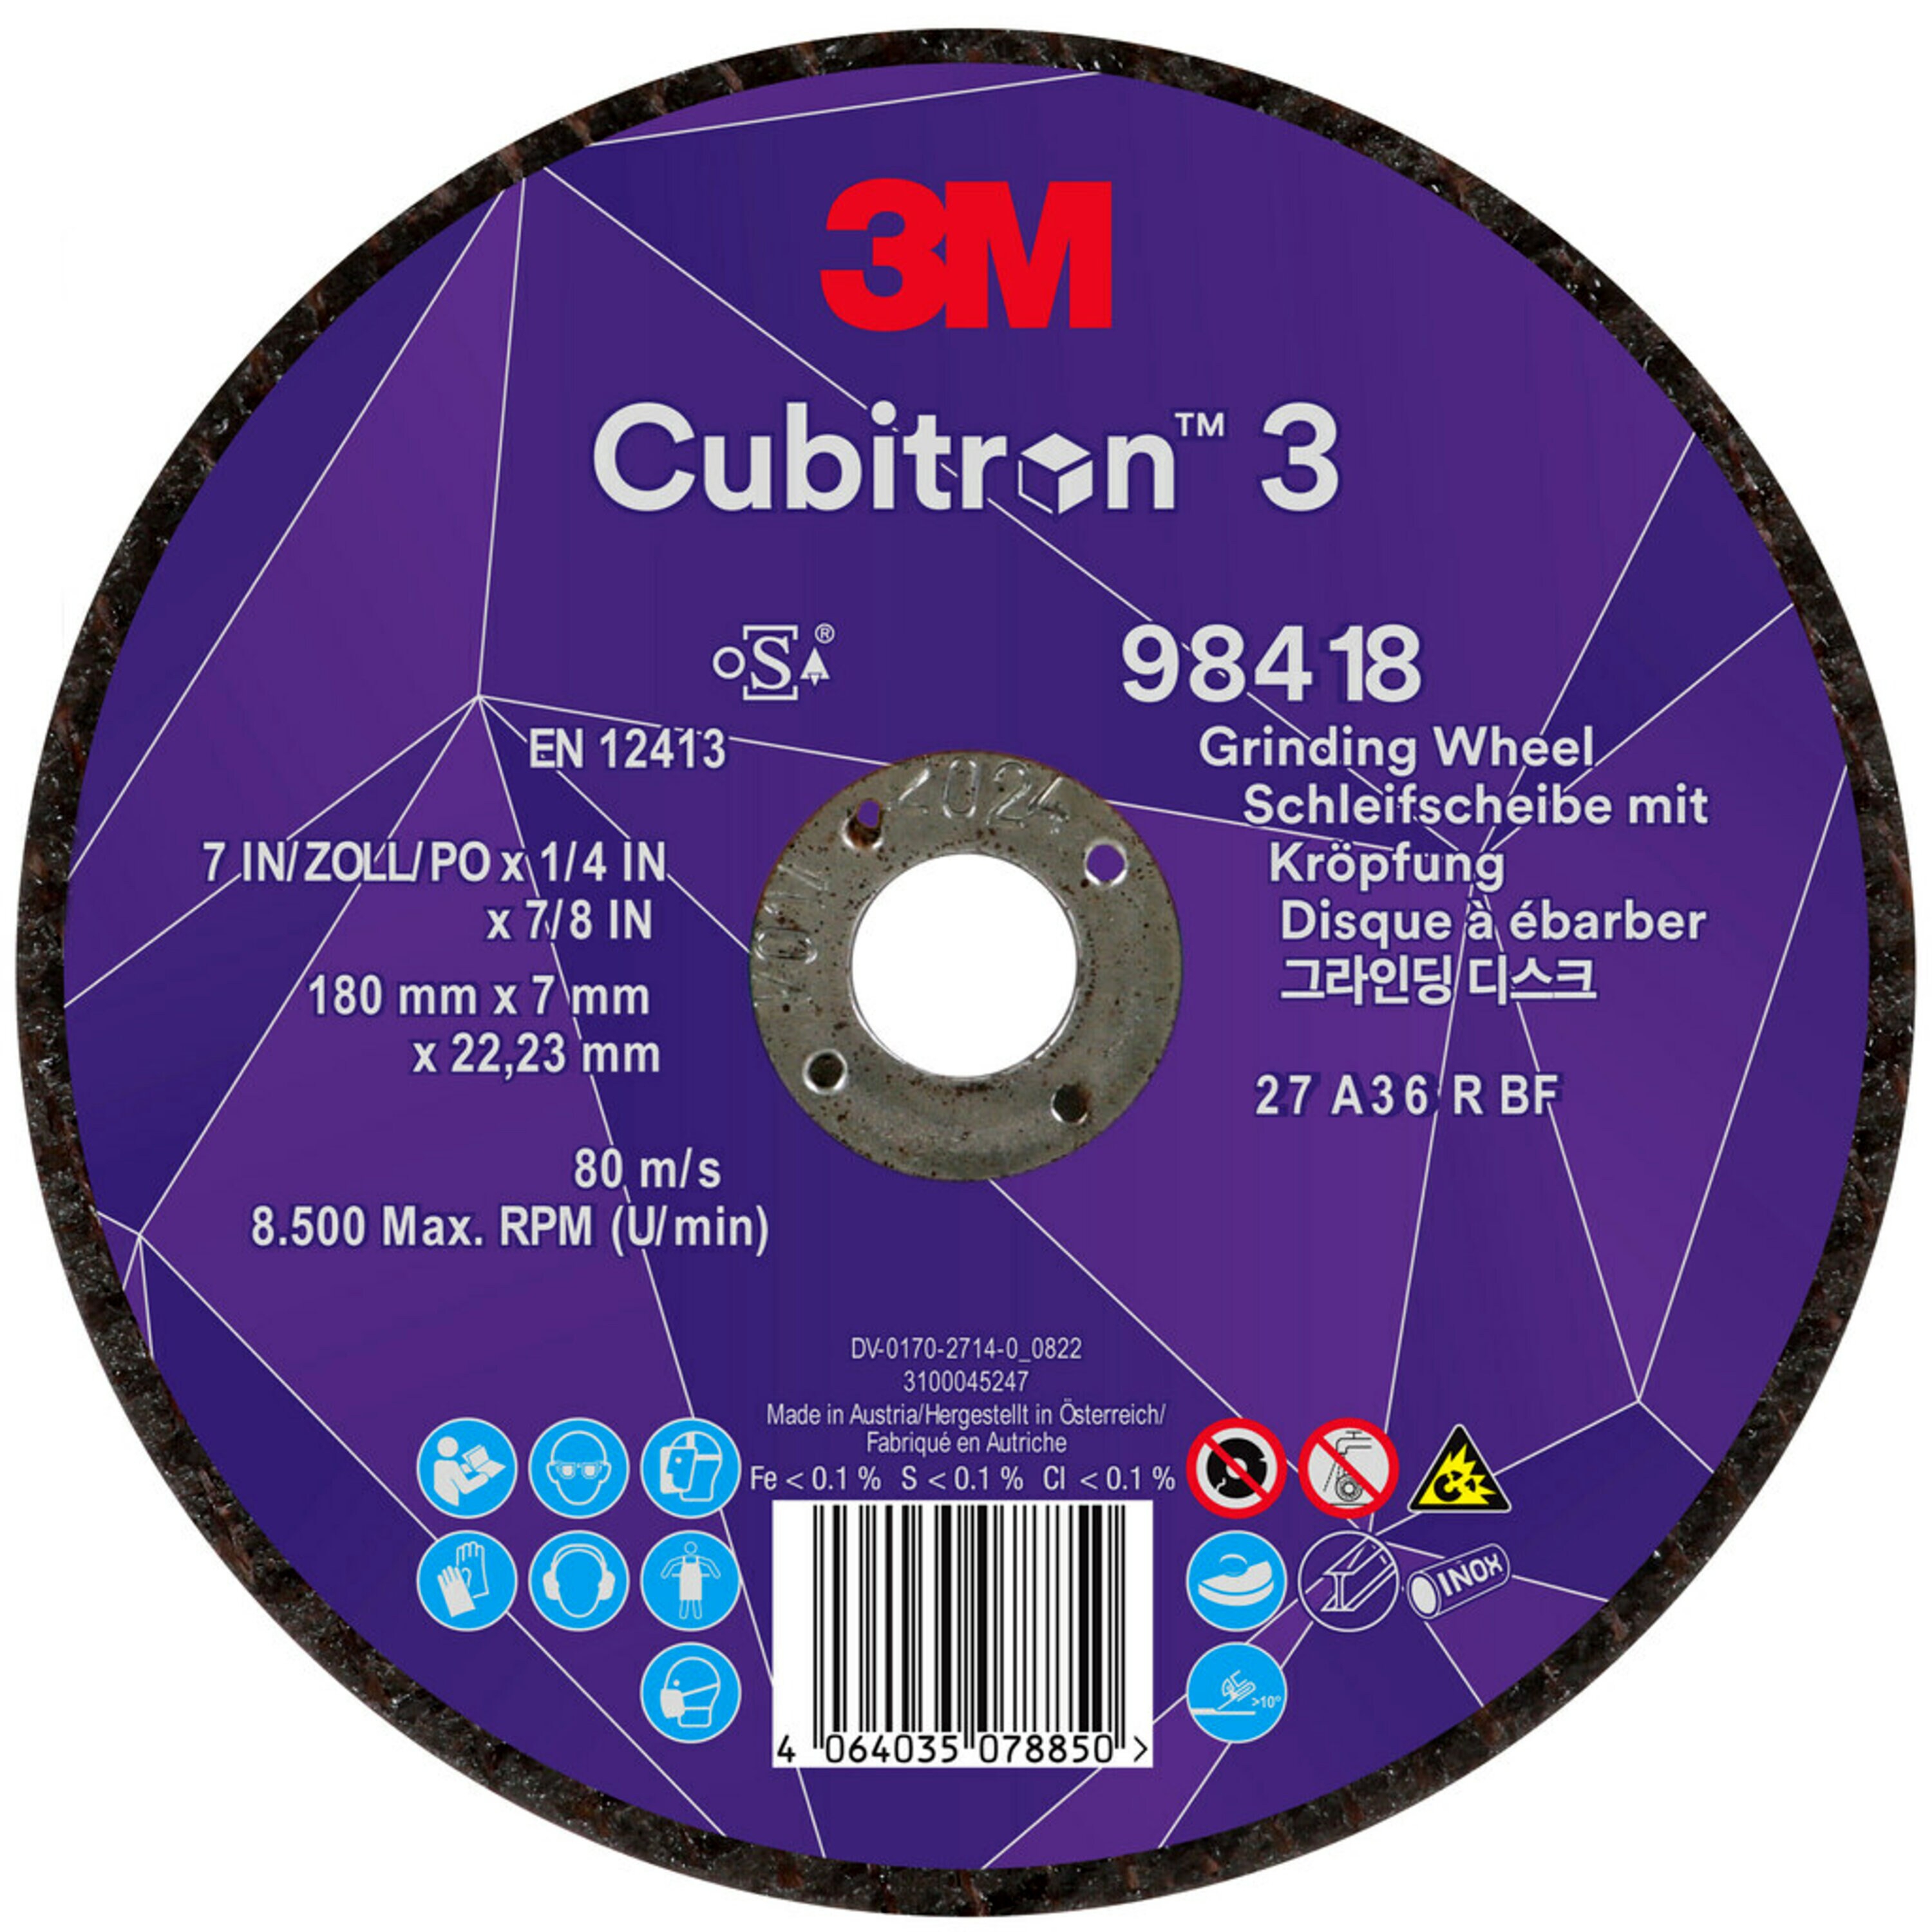 3M Cubitron 3 rough grinding wheel, 180 mm, 7.0 mm, 22.23 mm, 36+, type 27 # 98418